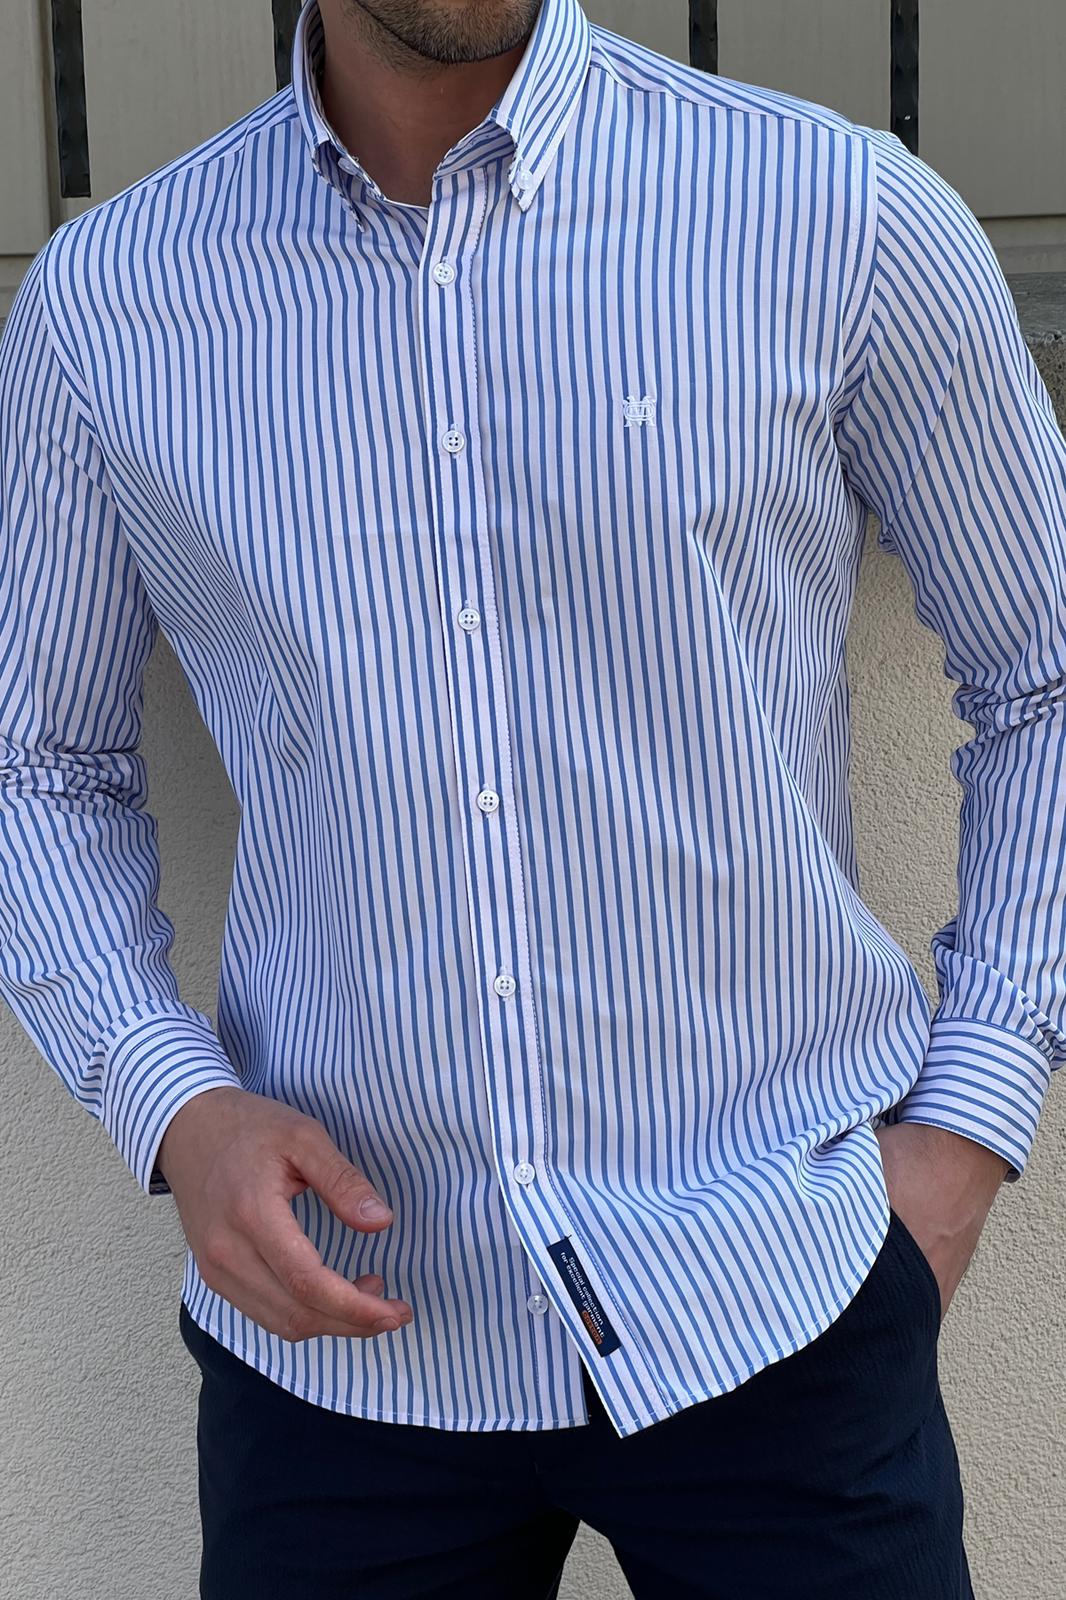 Brabion Daniel Striped White and Blue Shirt